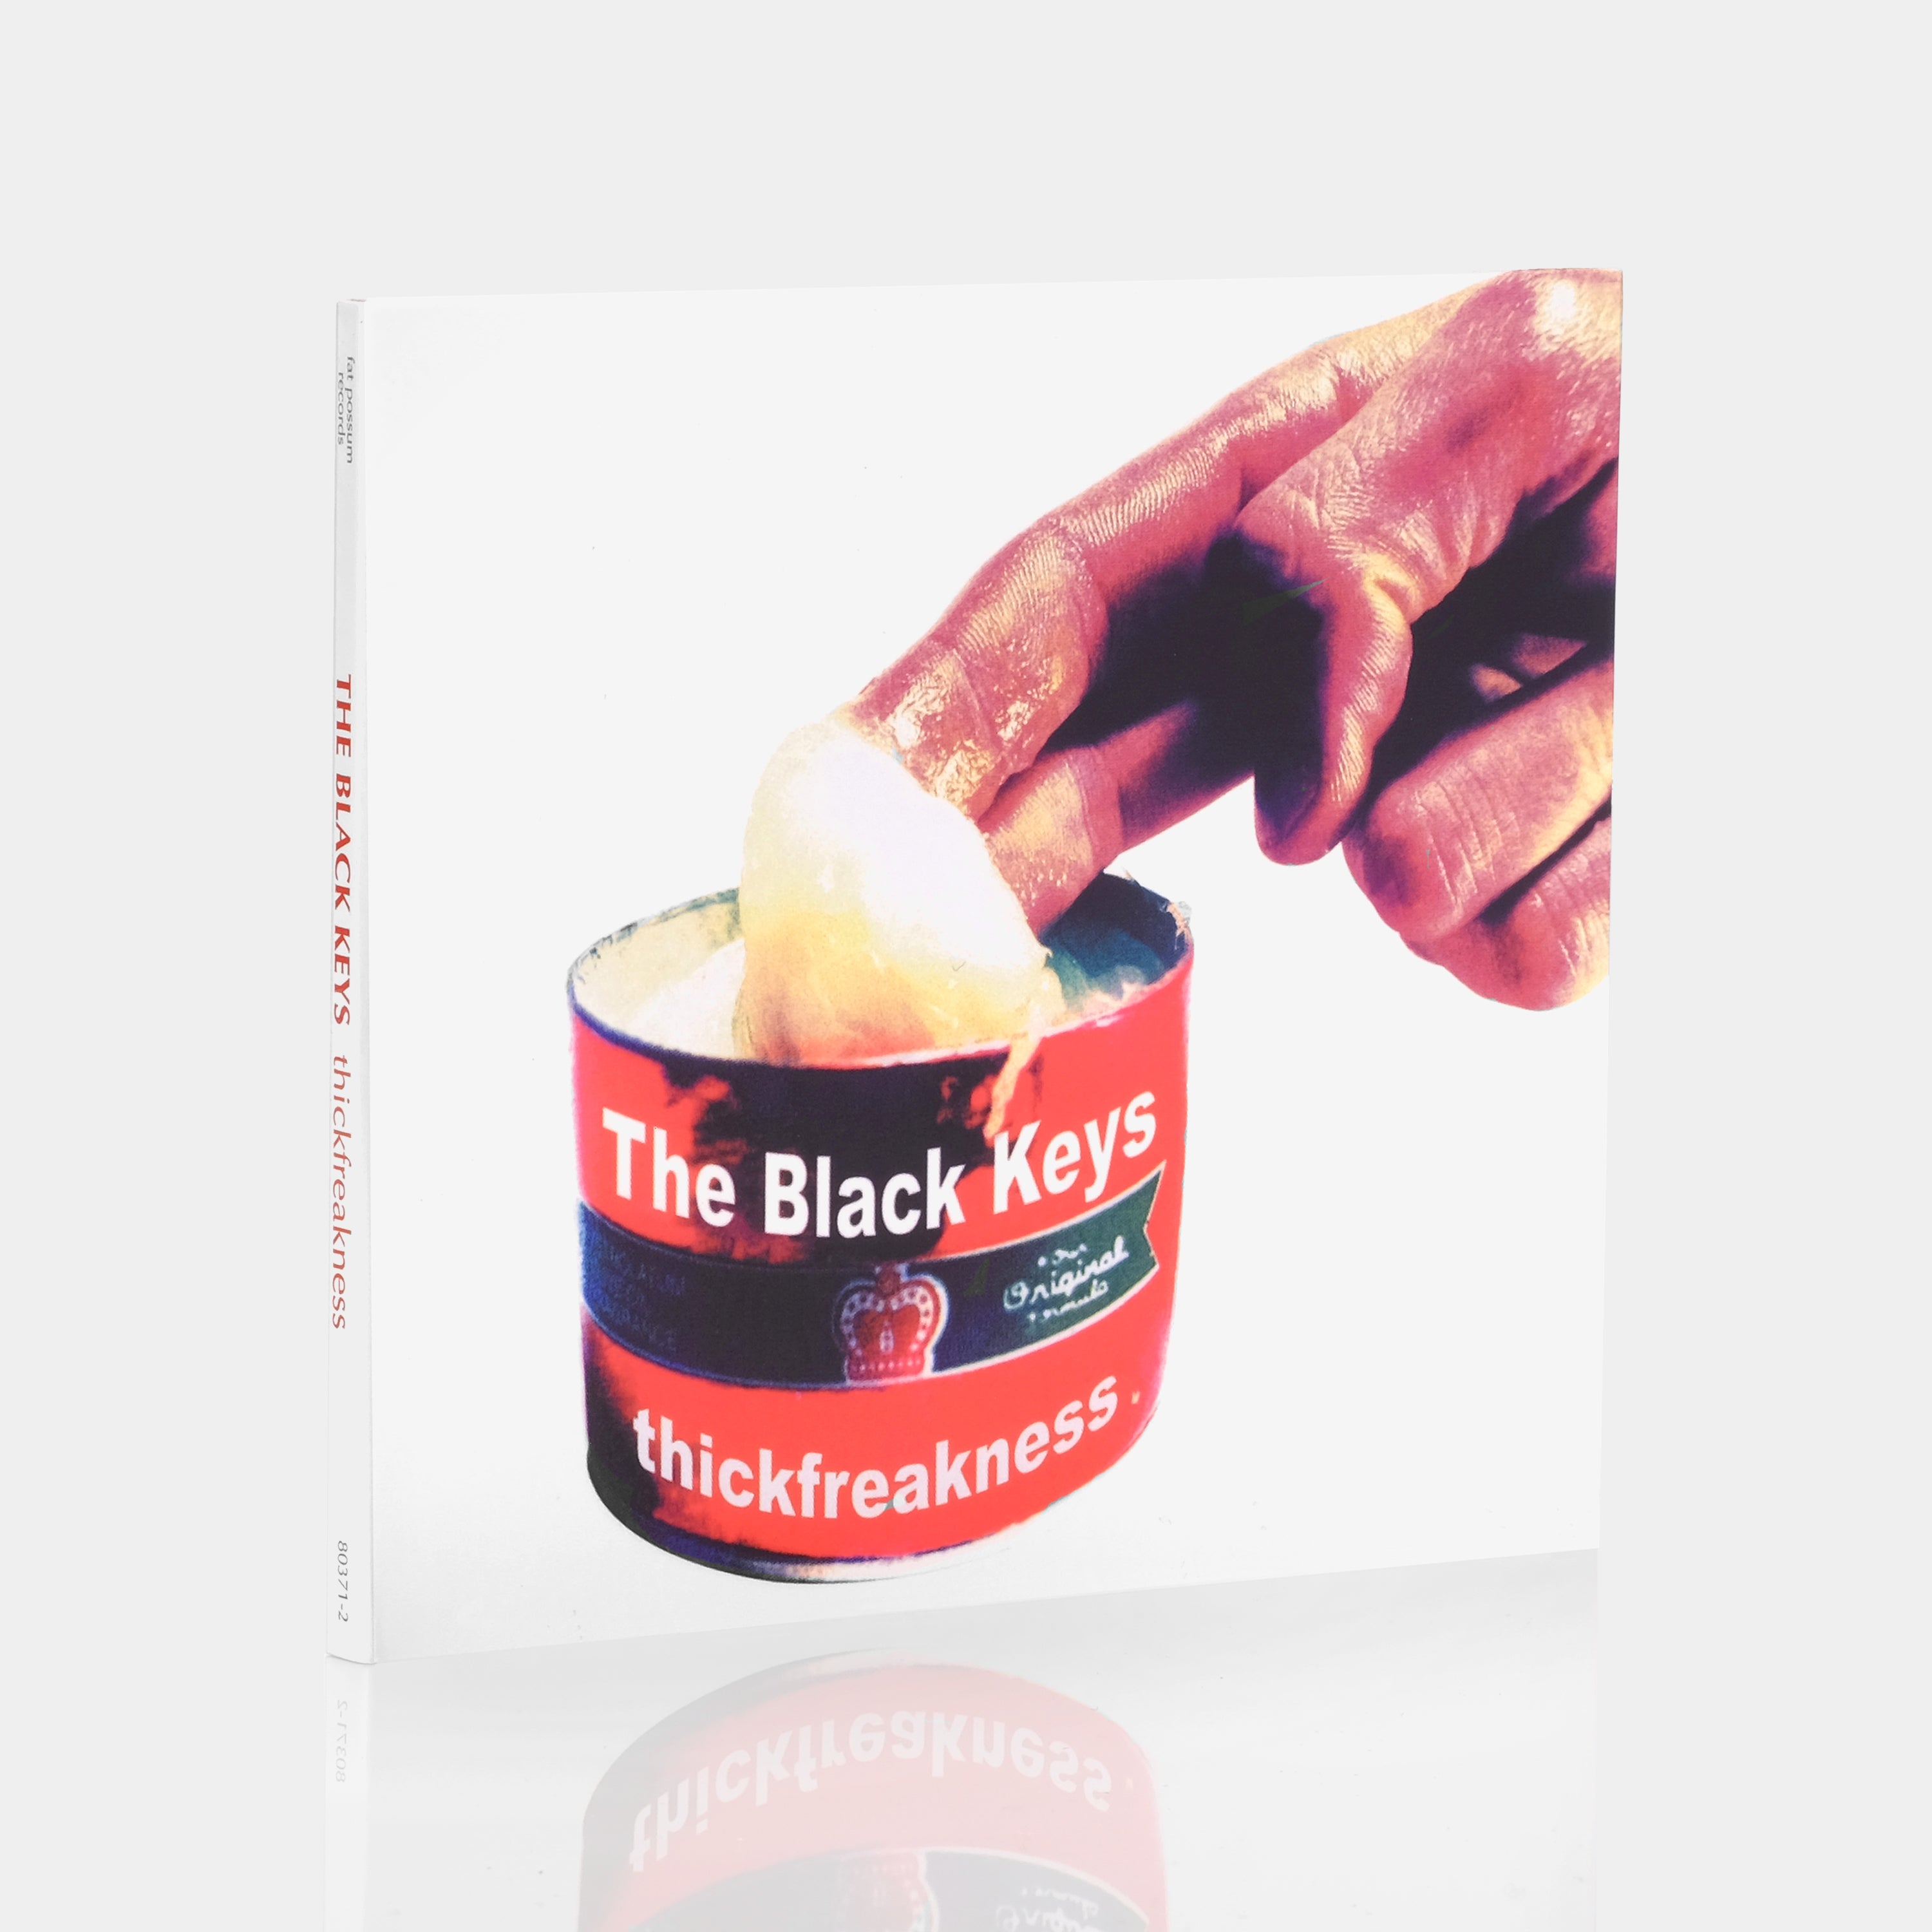 The Black Keys - Thickfreakness CD